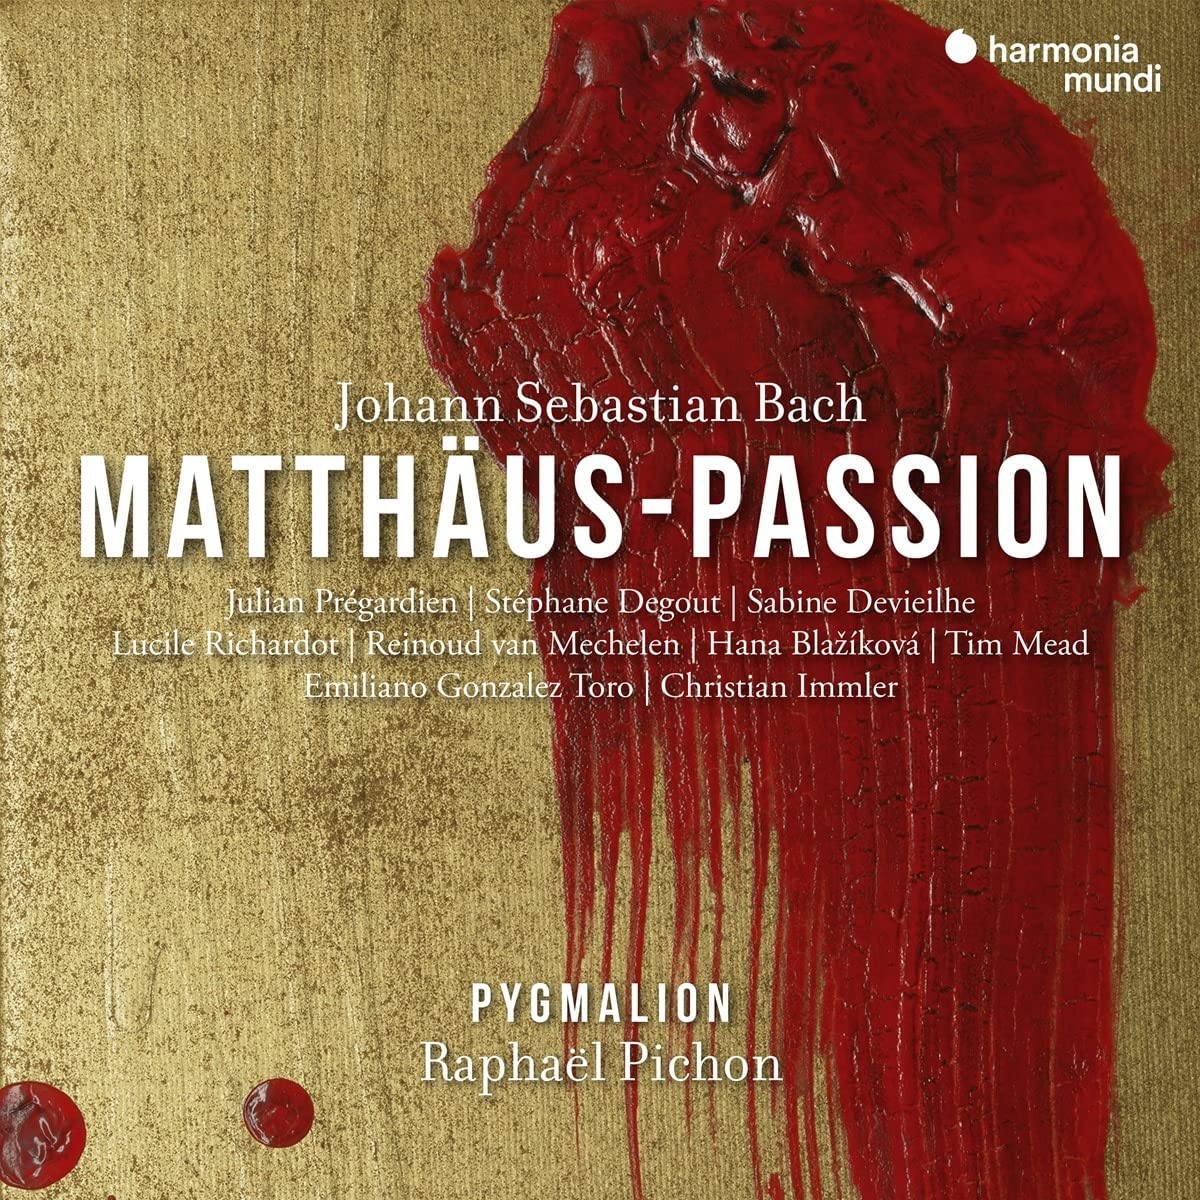 CD cover Matthäus-Passion Pygmalion